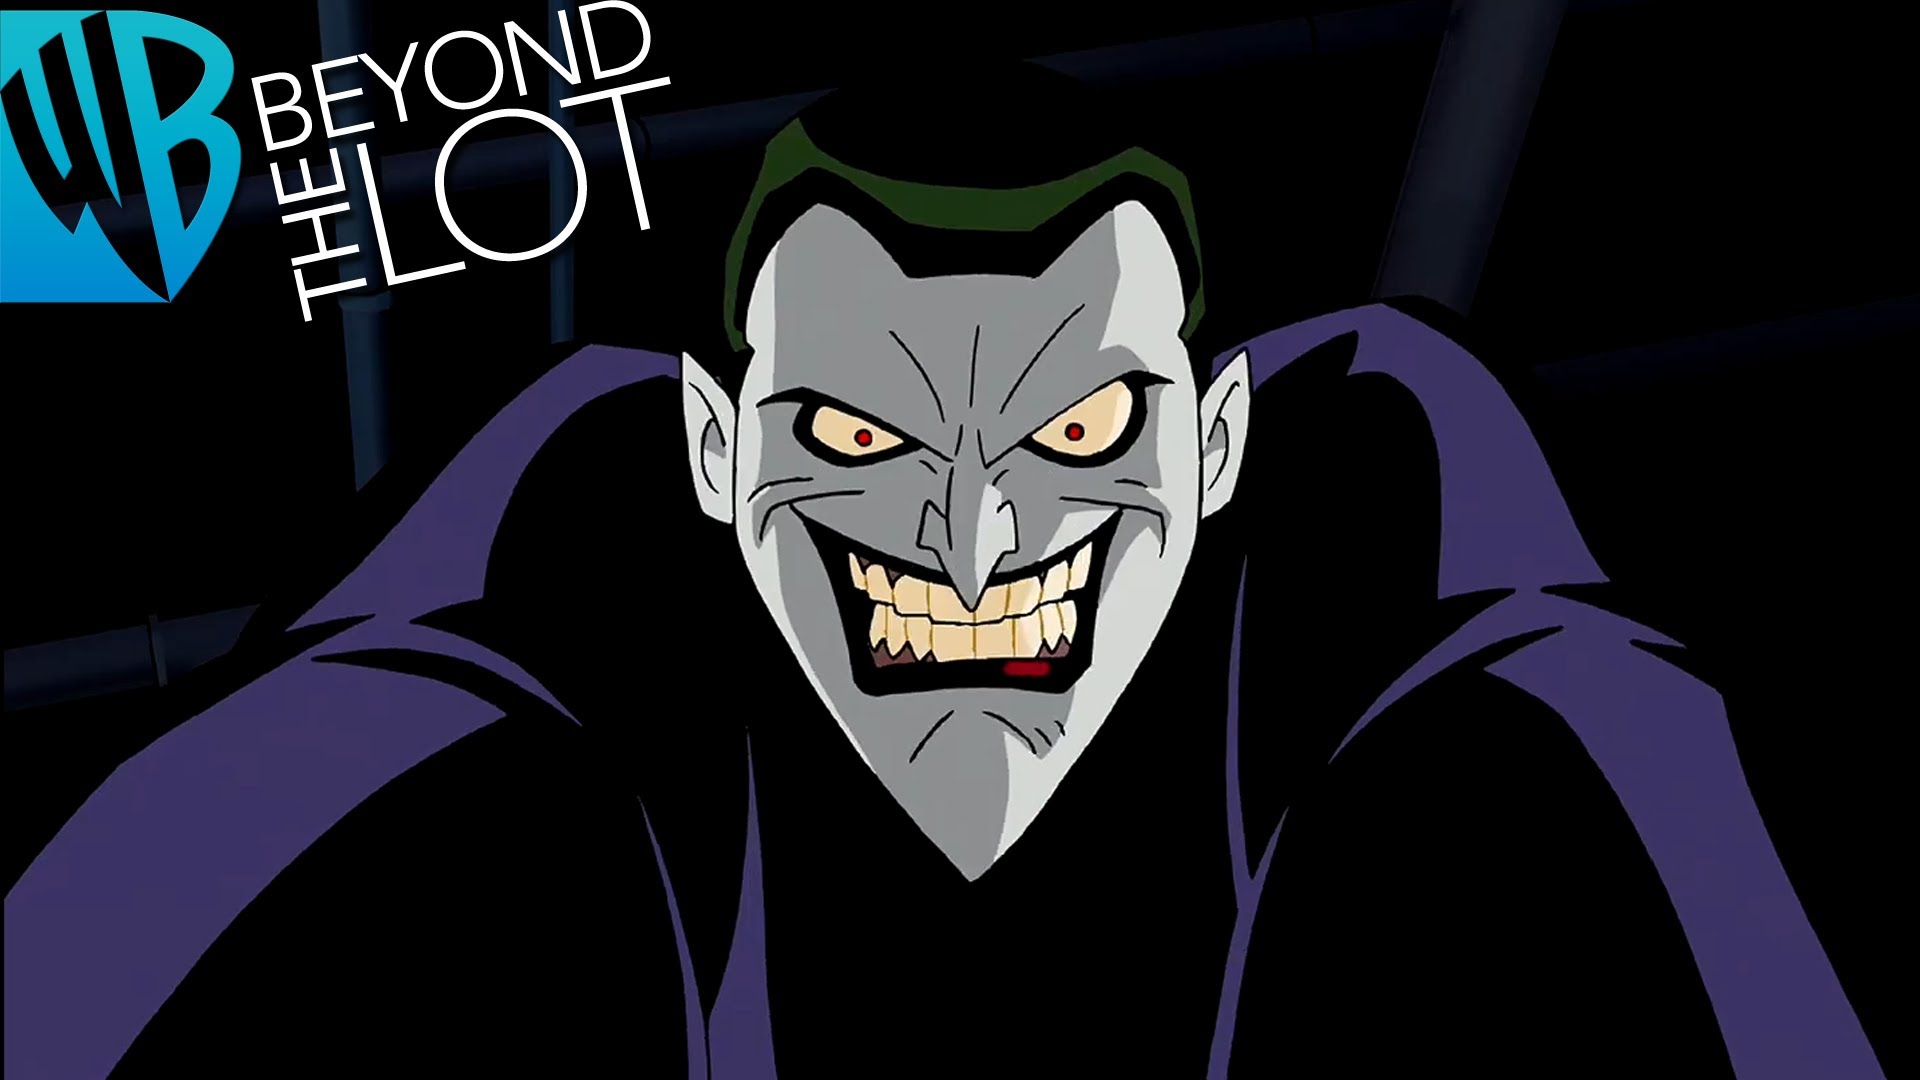 Batman Beyond: Return Of The Joker Backgrounds, Compatible - PC, Mobile, Gadgets| 1920x1080 px